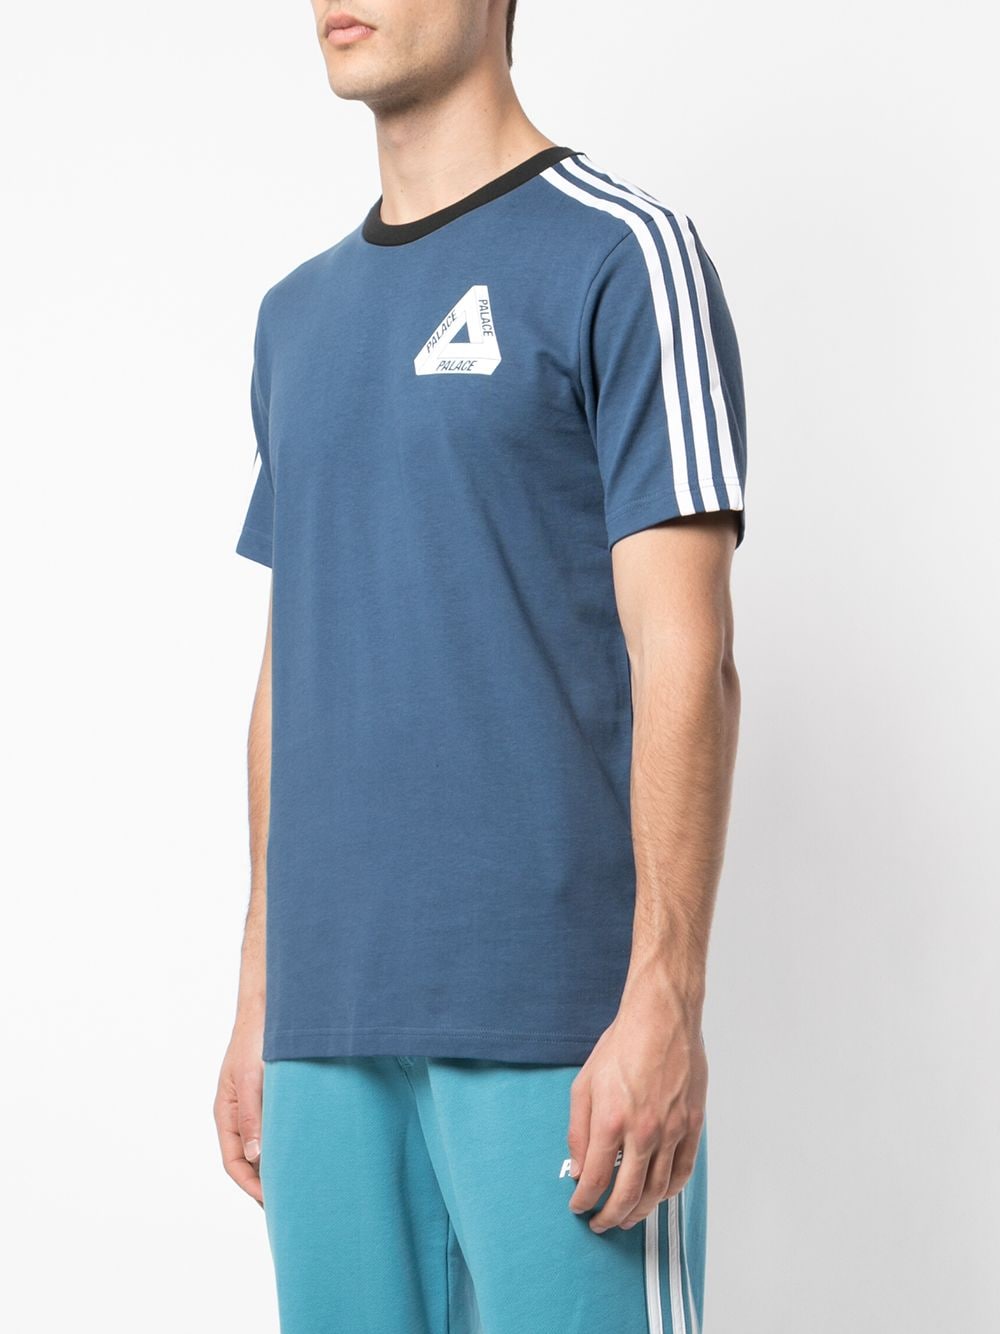 Camiseta x Adidas con logo Palace por 128€ - online SS22 - Devolución gratuita pago seguro